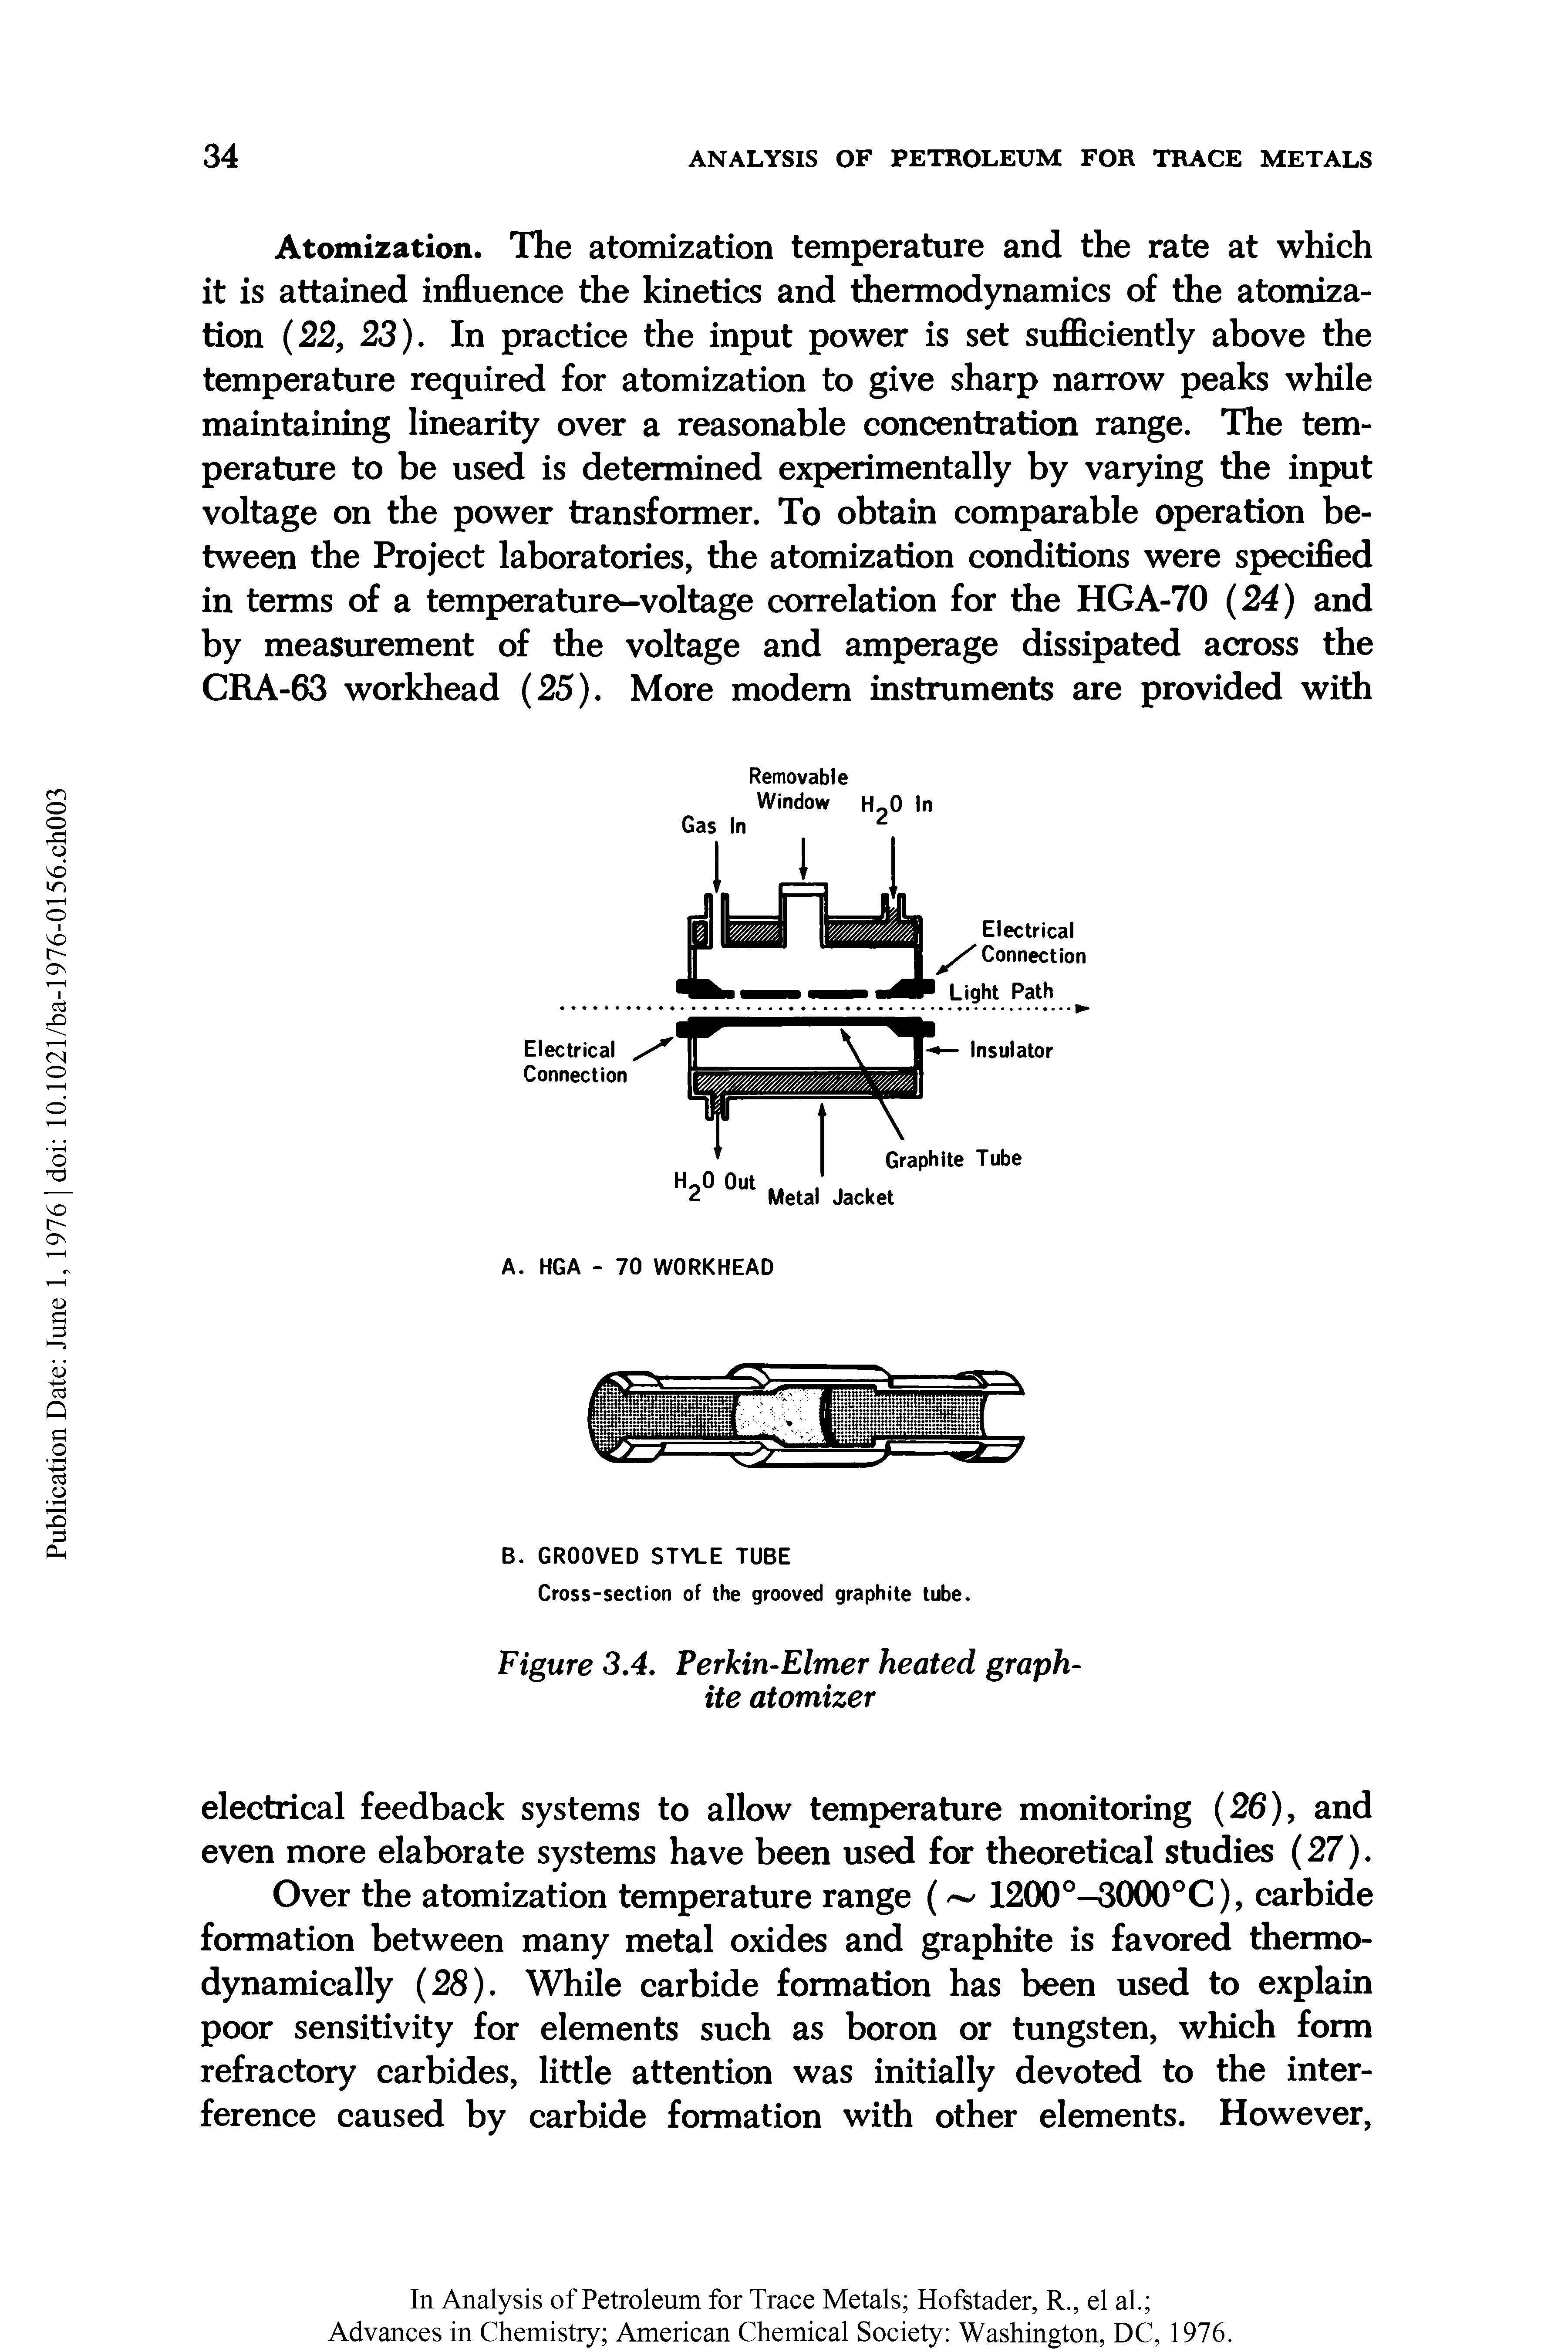 Figure 3.4. Perkin-Elmer heated graphite atomizer...